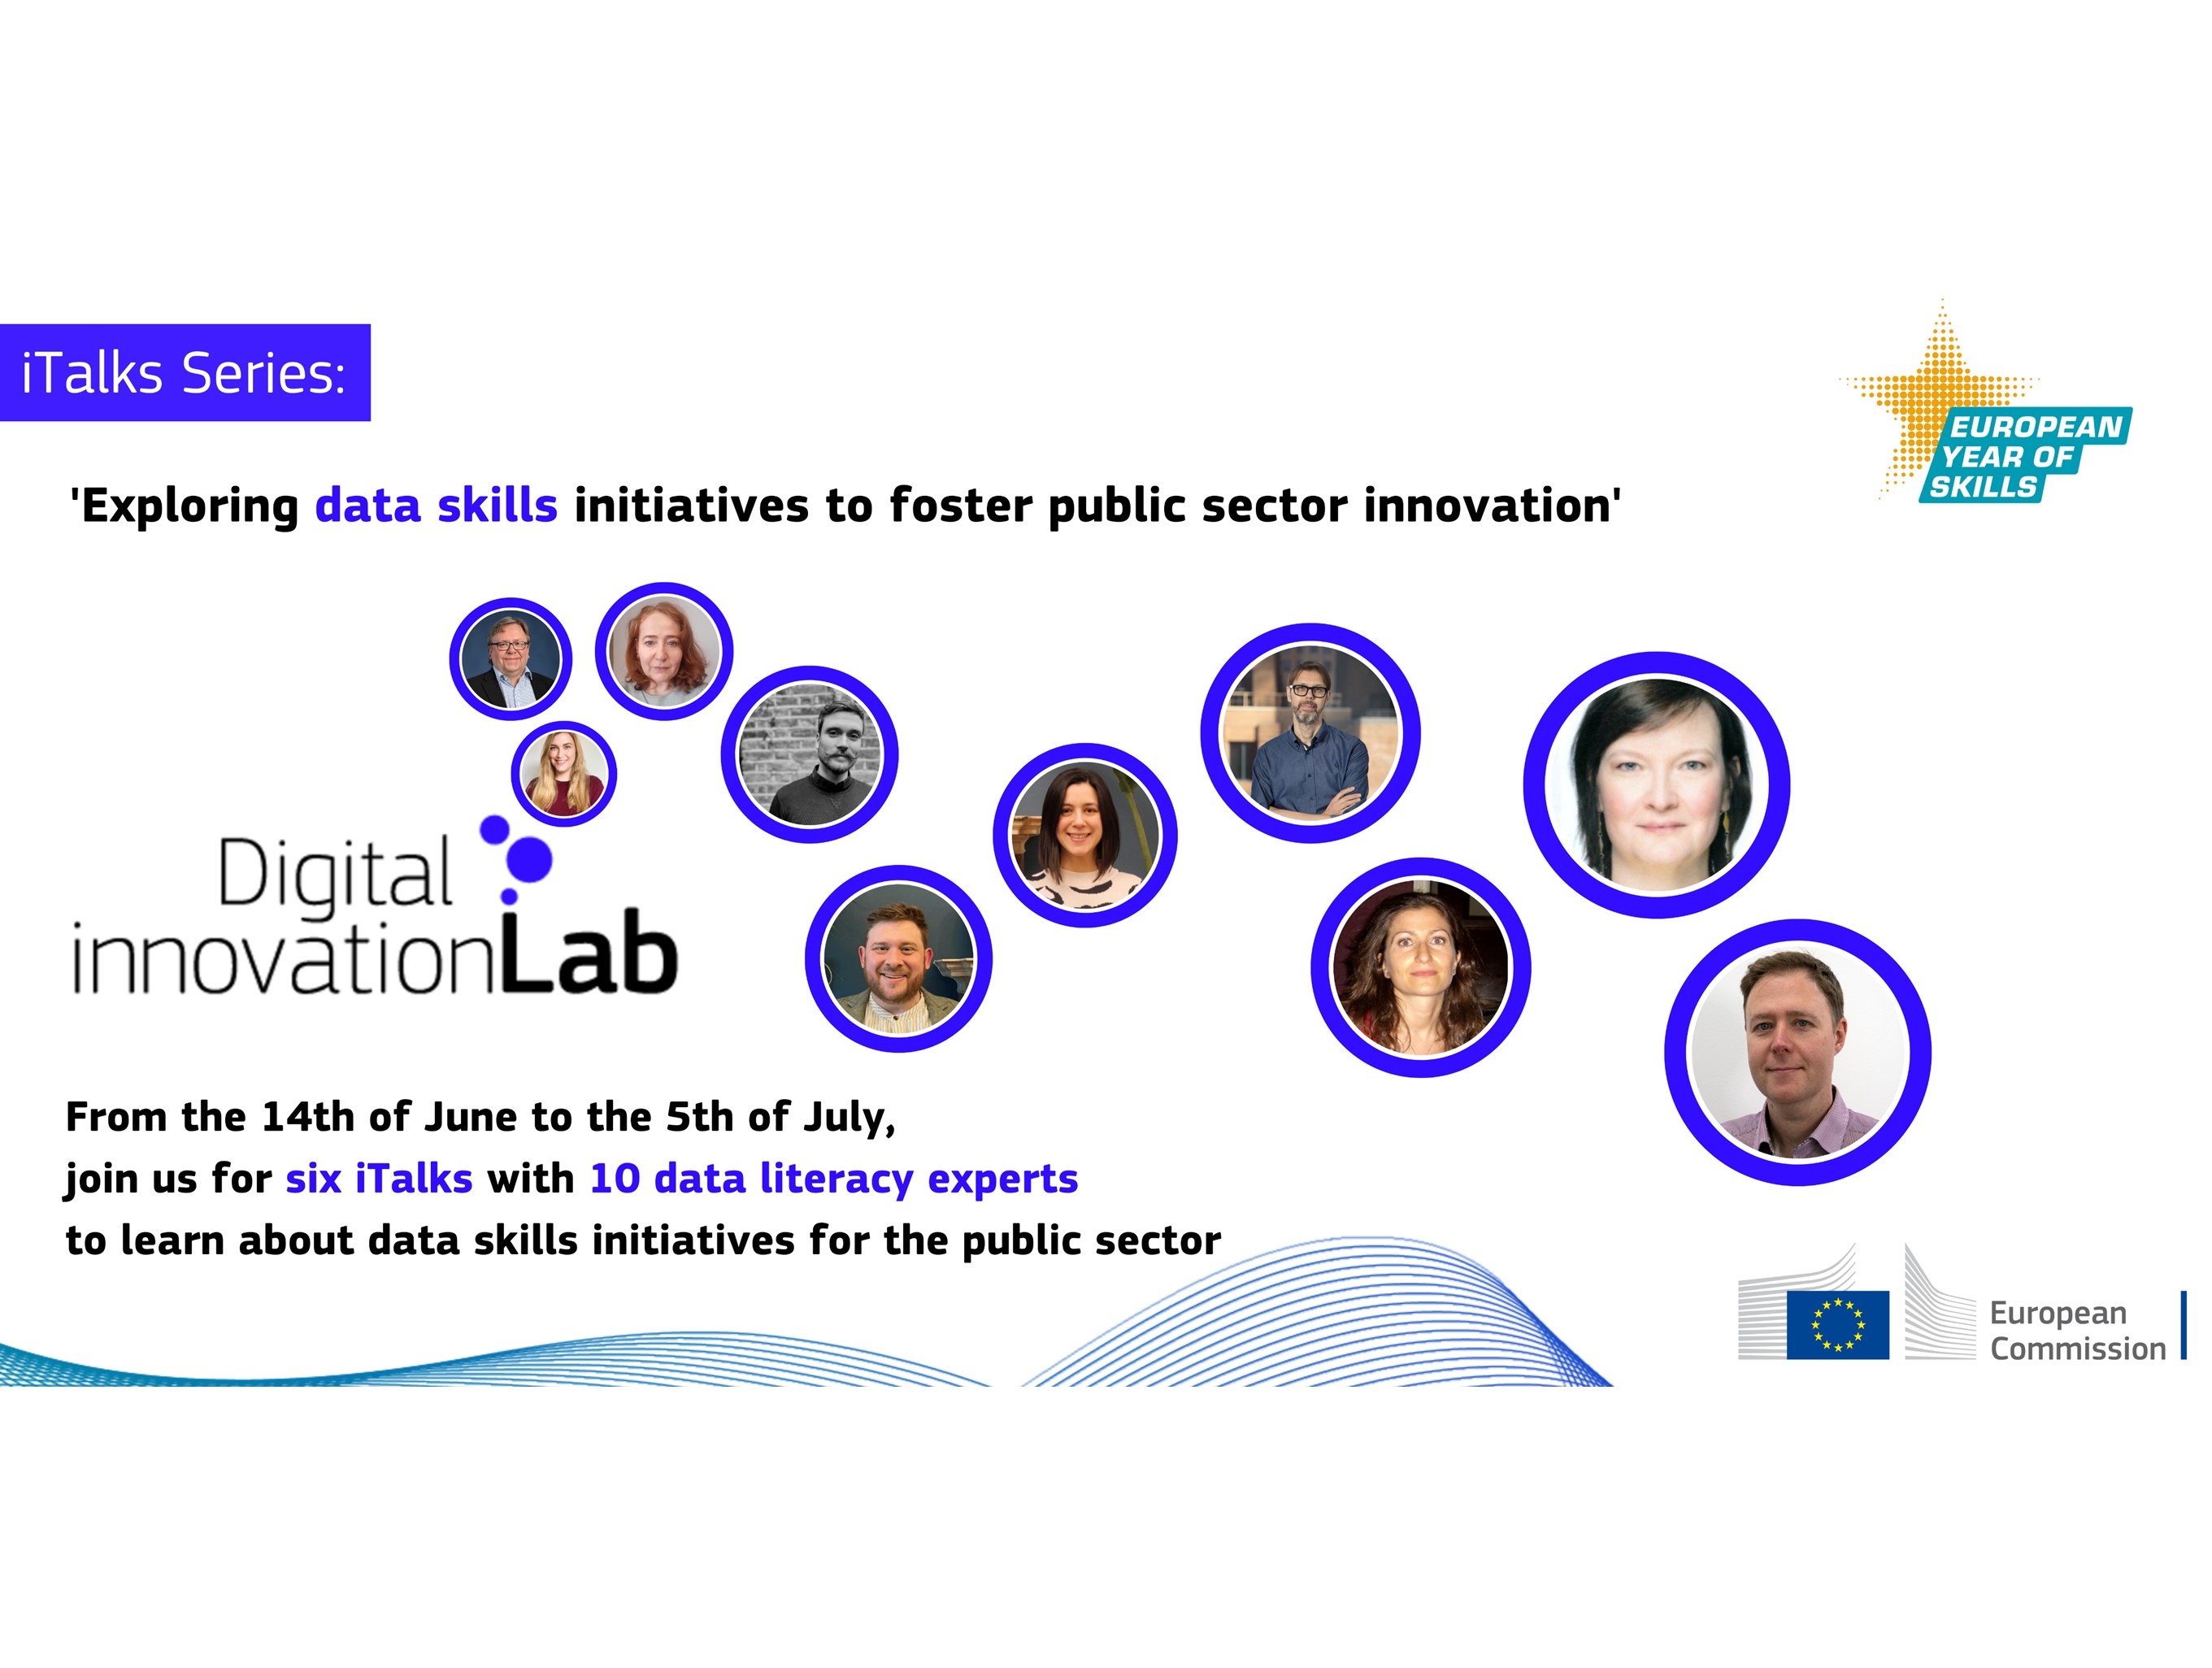 Join the Innovation Lab’s ‘iTalks’ series on open data skills initiatives